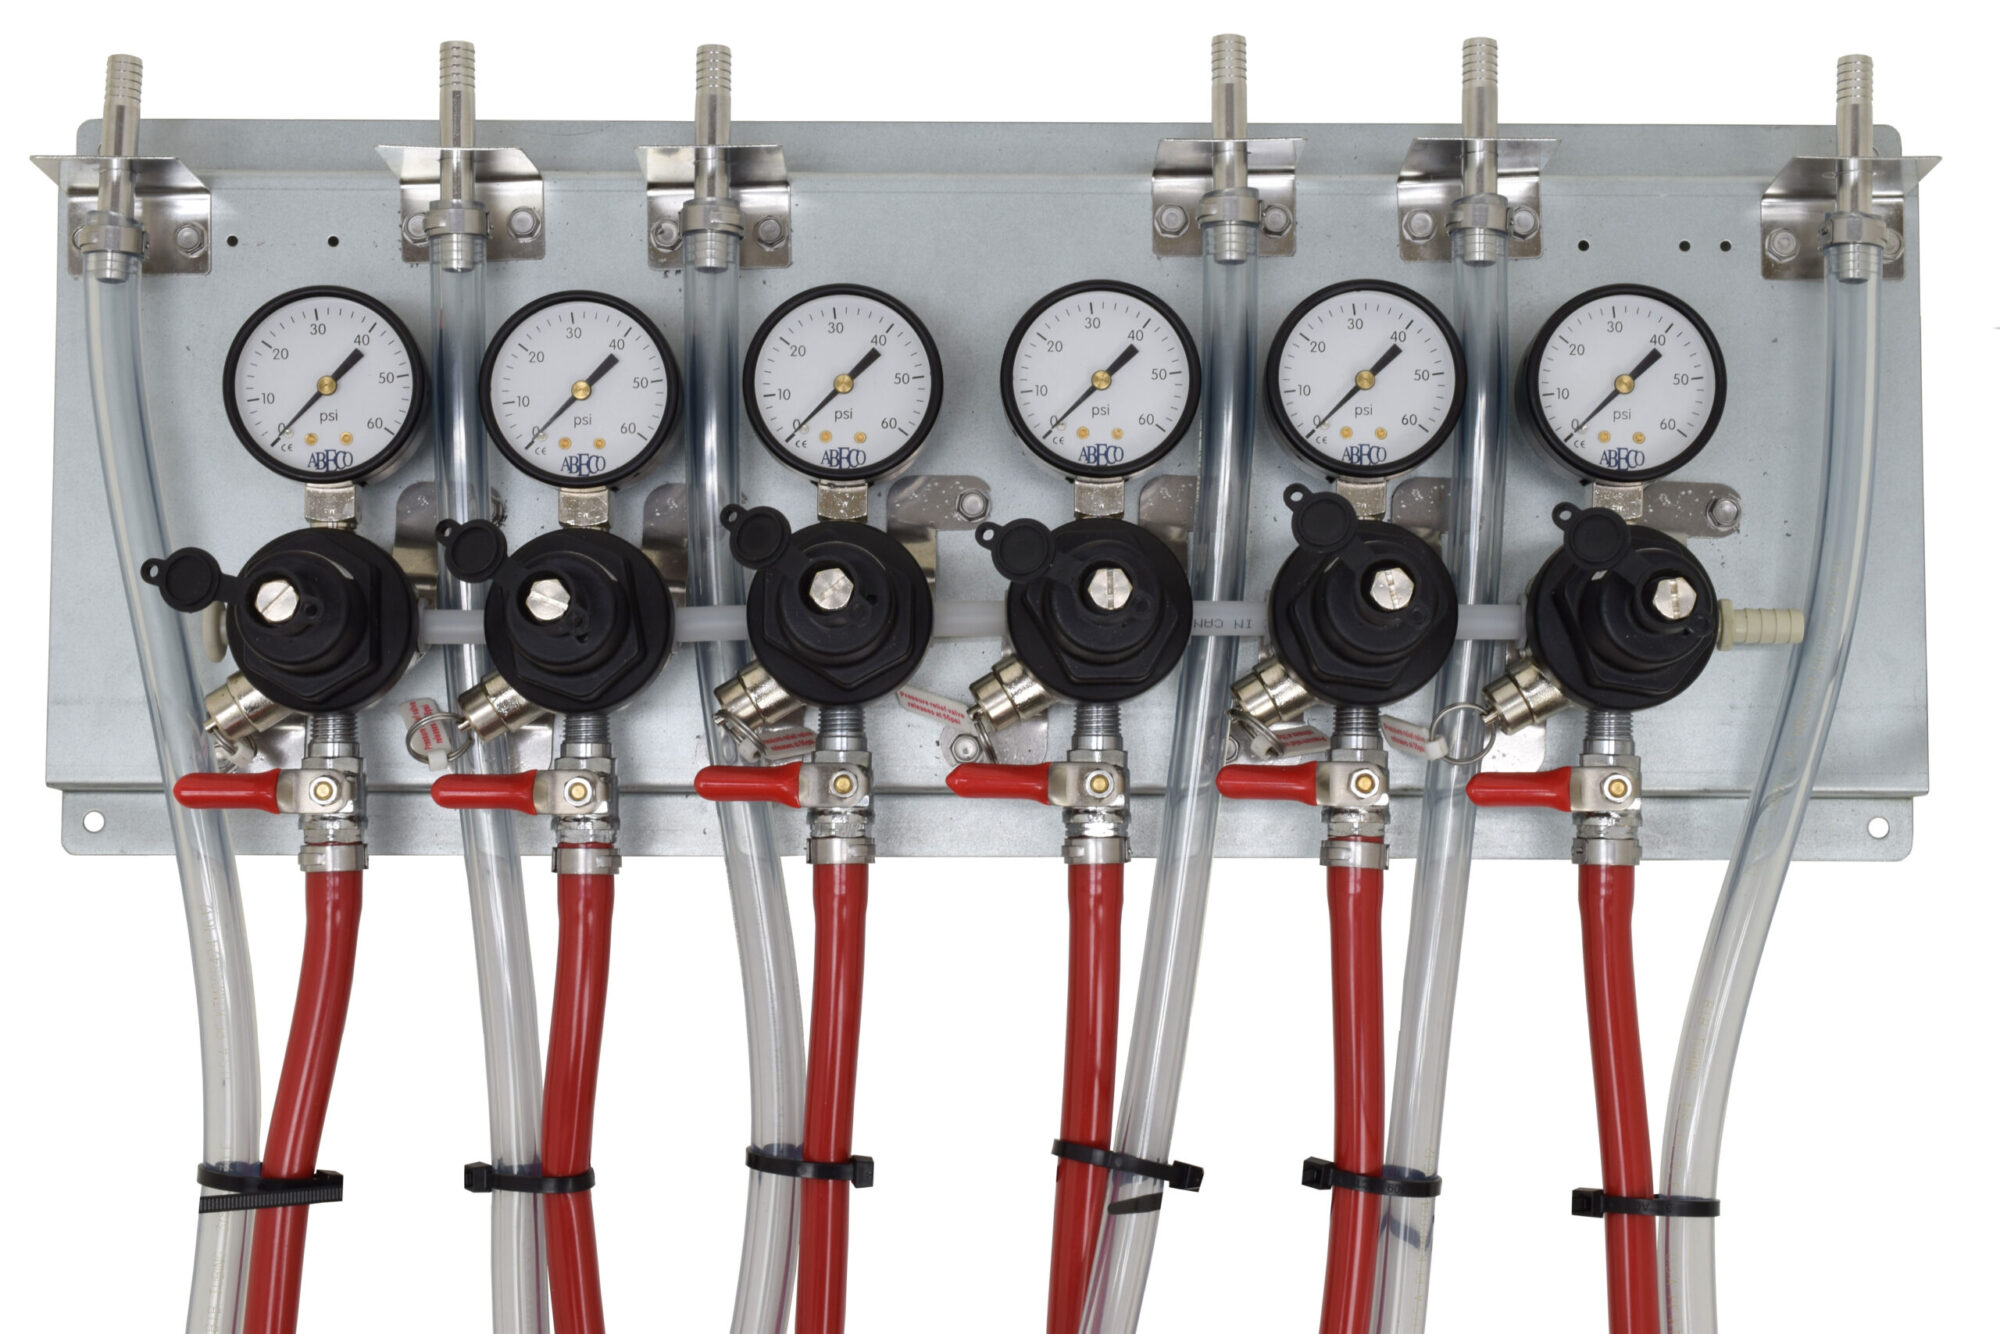 2706PH Six Pressure Regulator Panel With TecFlo Regulators and 8' Hose kits